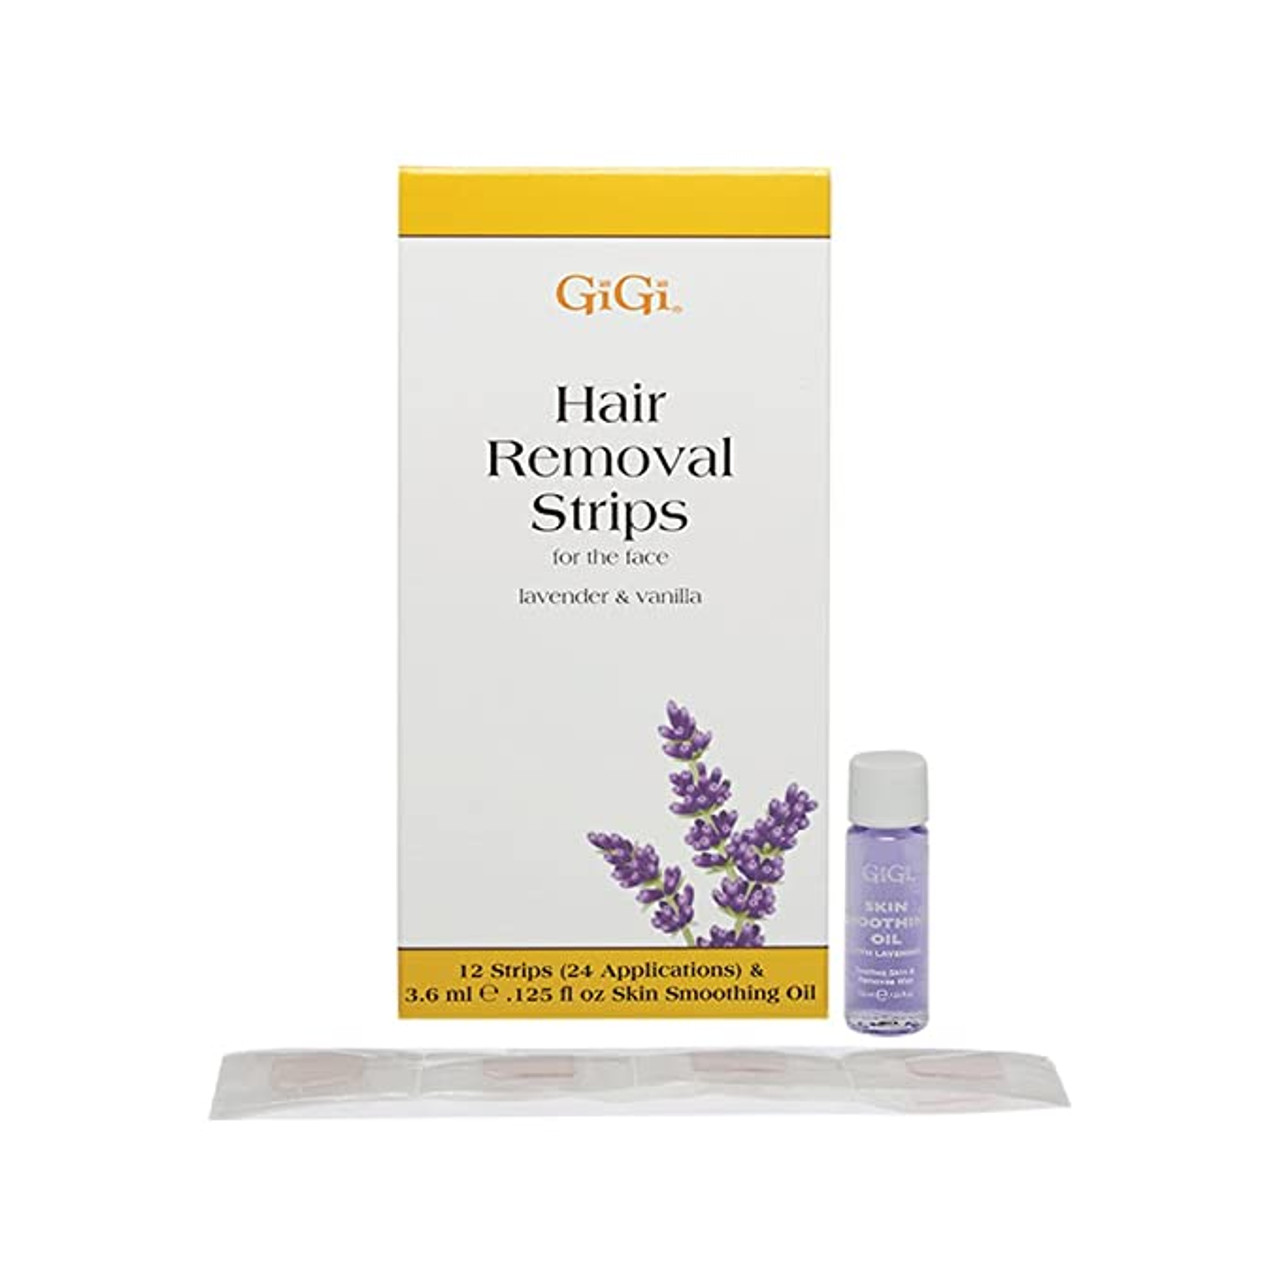 GiGi Hair Removal Strips for the Face - Lavender & Vanilla